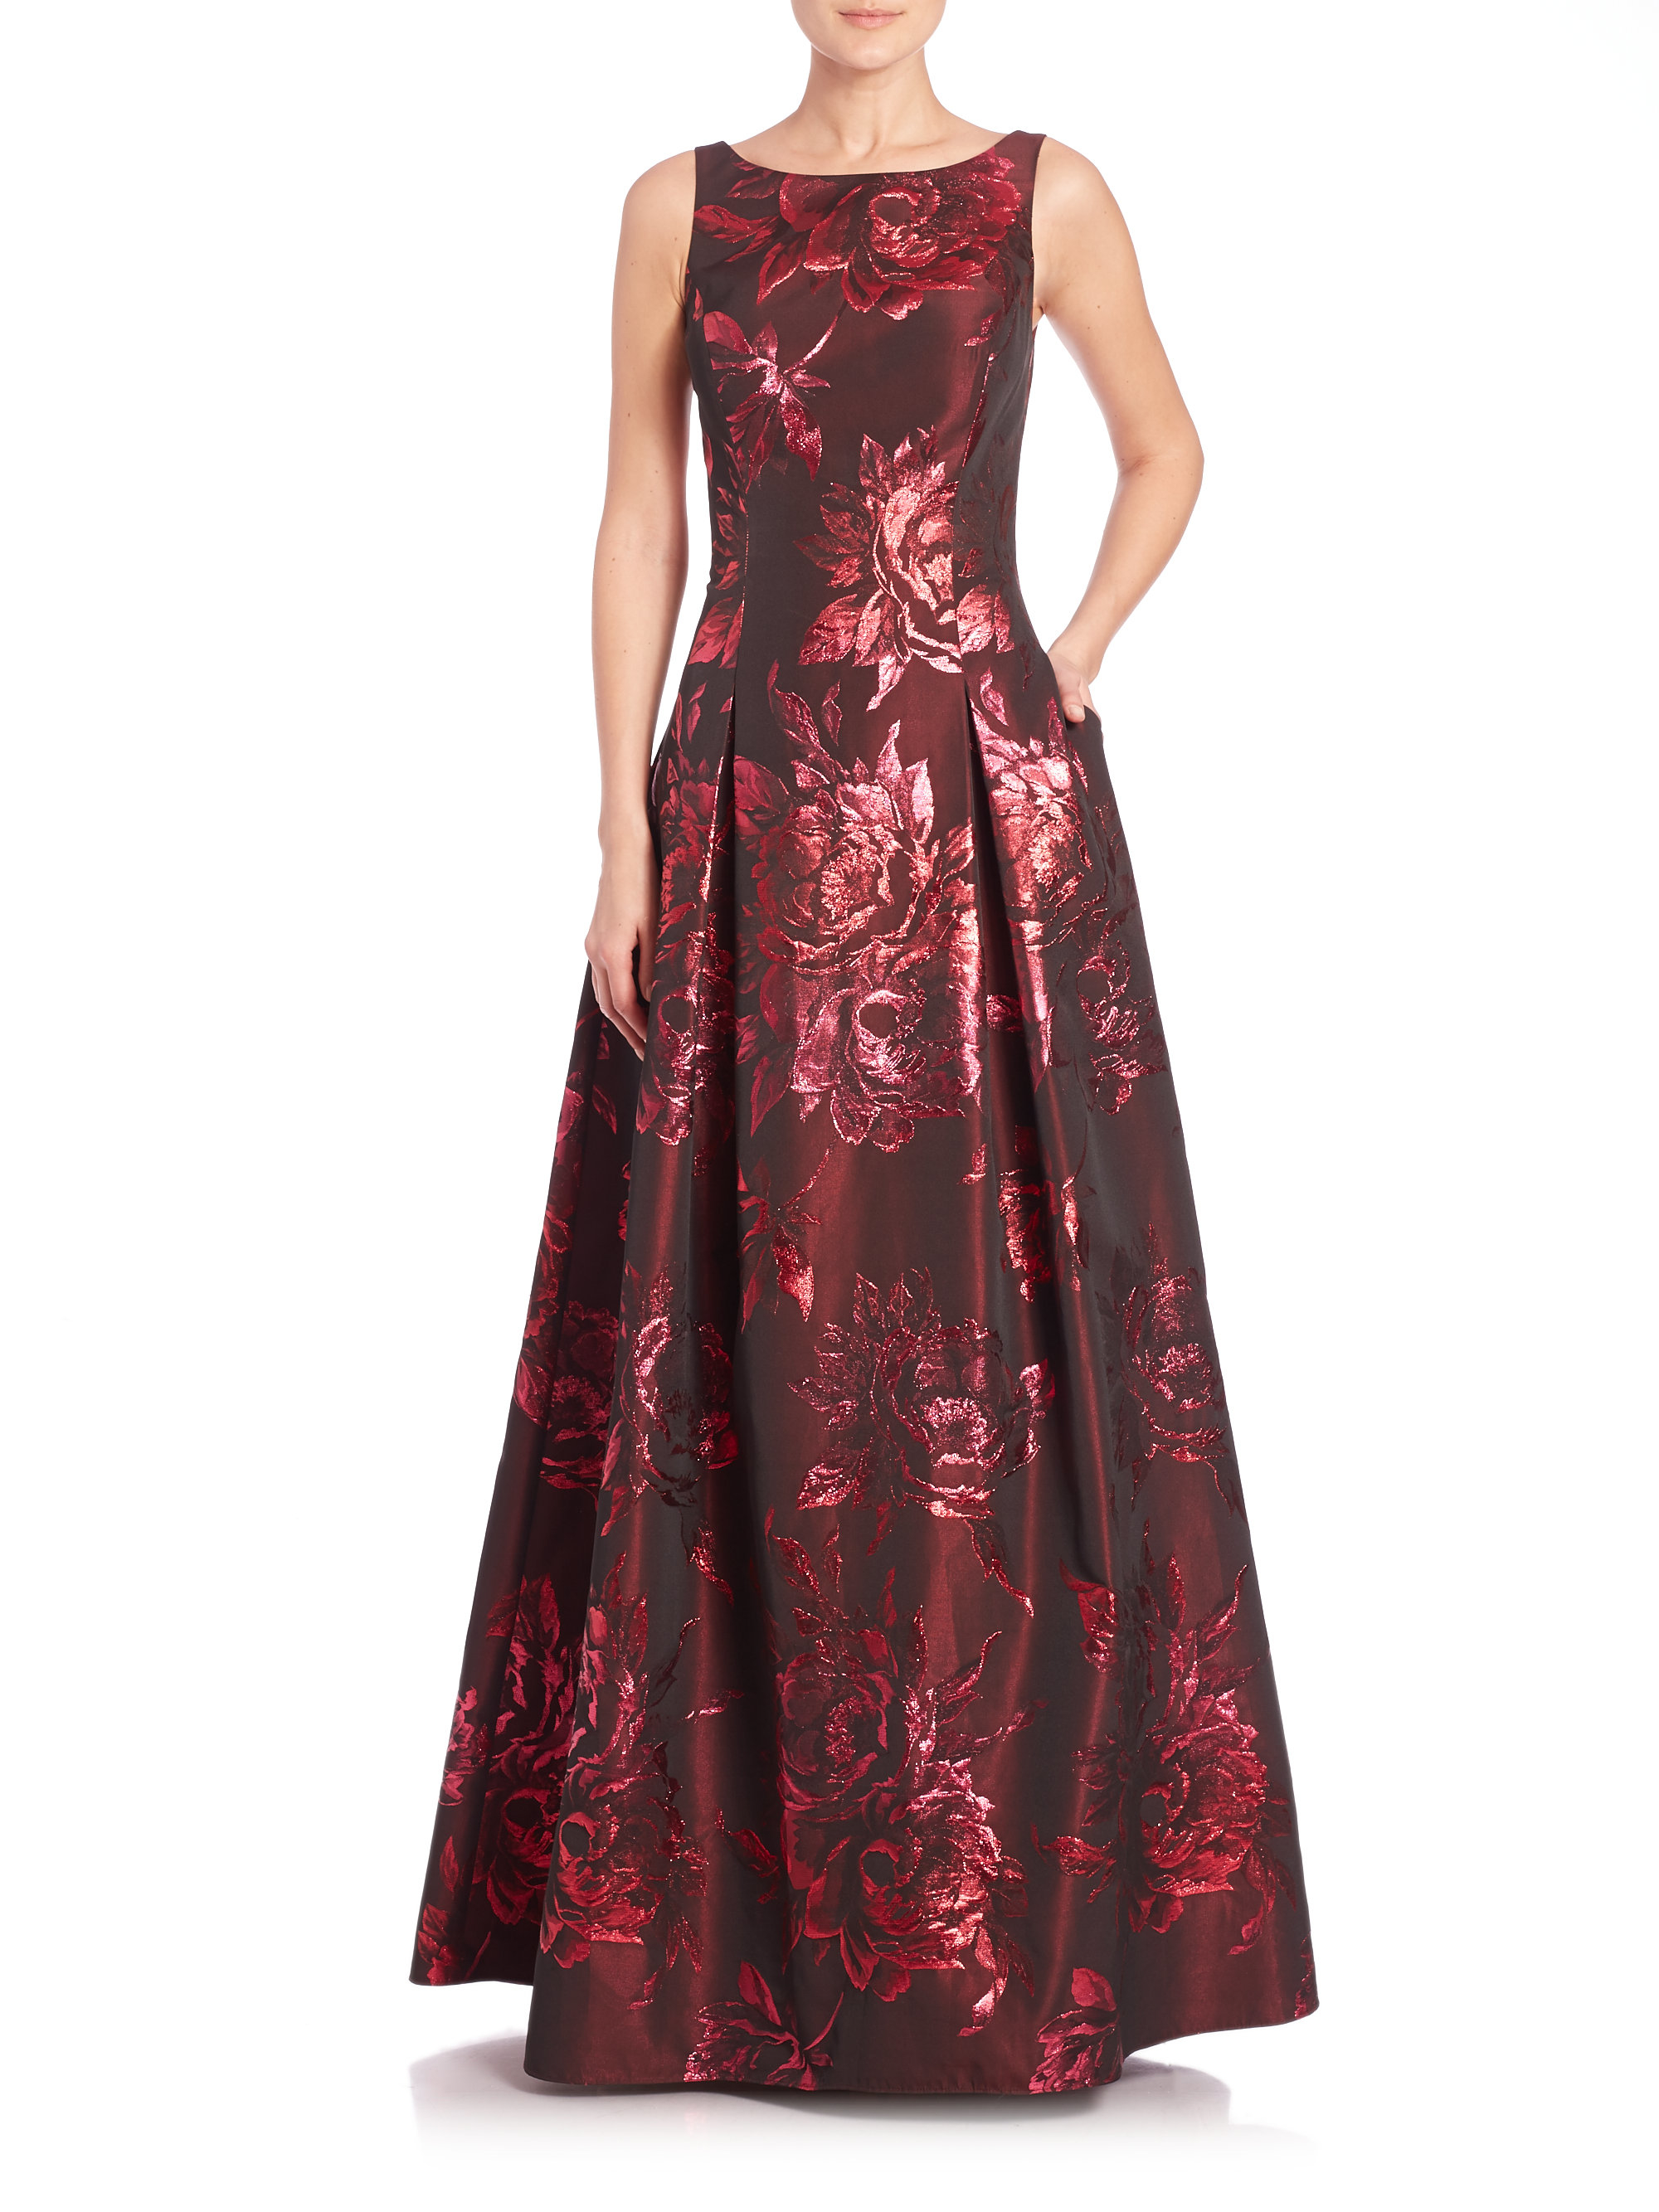 Lyst - Aidan Mattox Metallic Floral Gown in Red